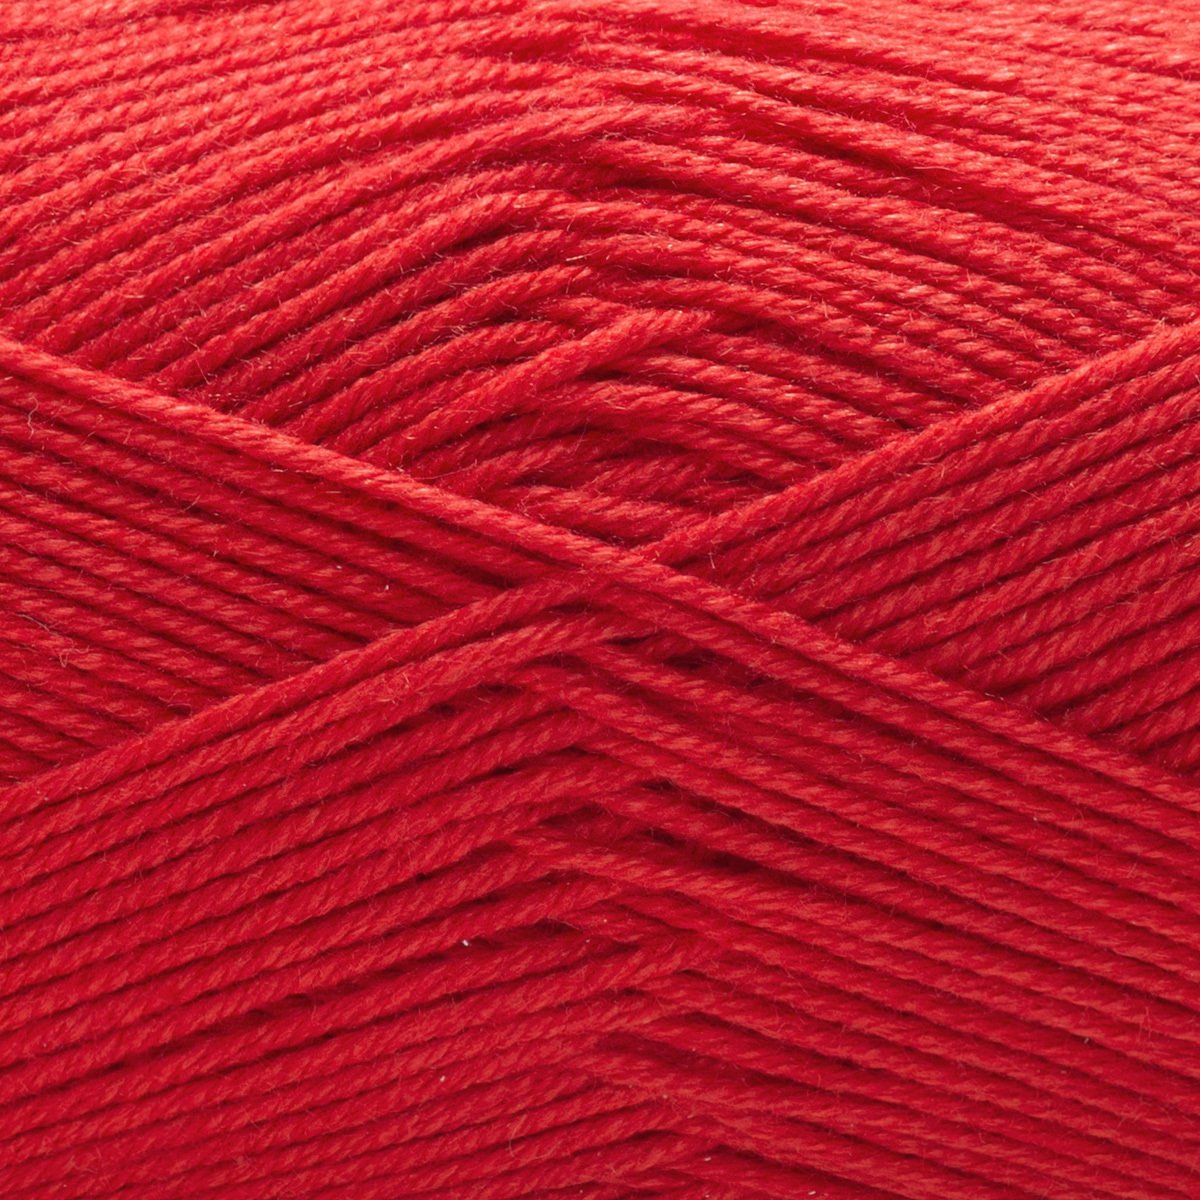 Gazzal Baby Cotton 205 (Газзал Бэби Коттон 205) 515 - красный